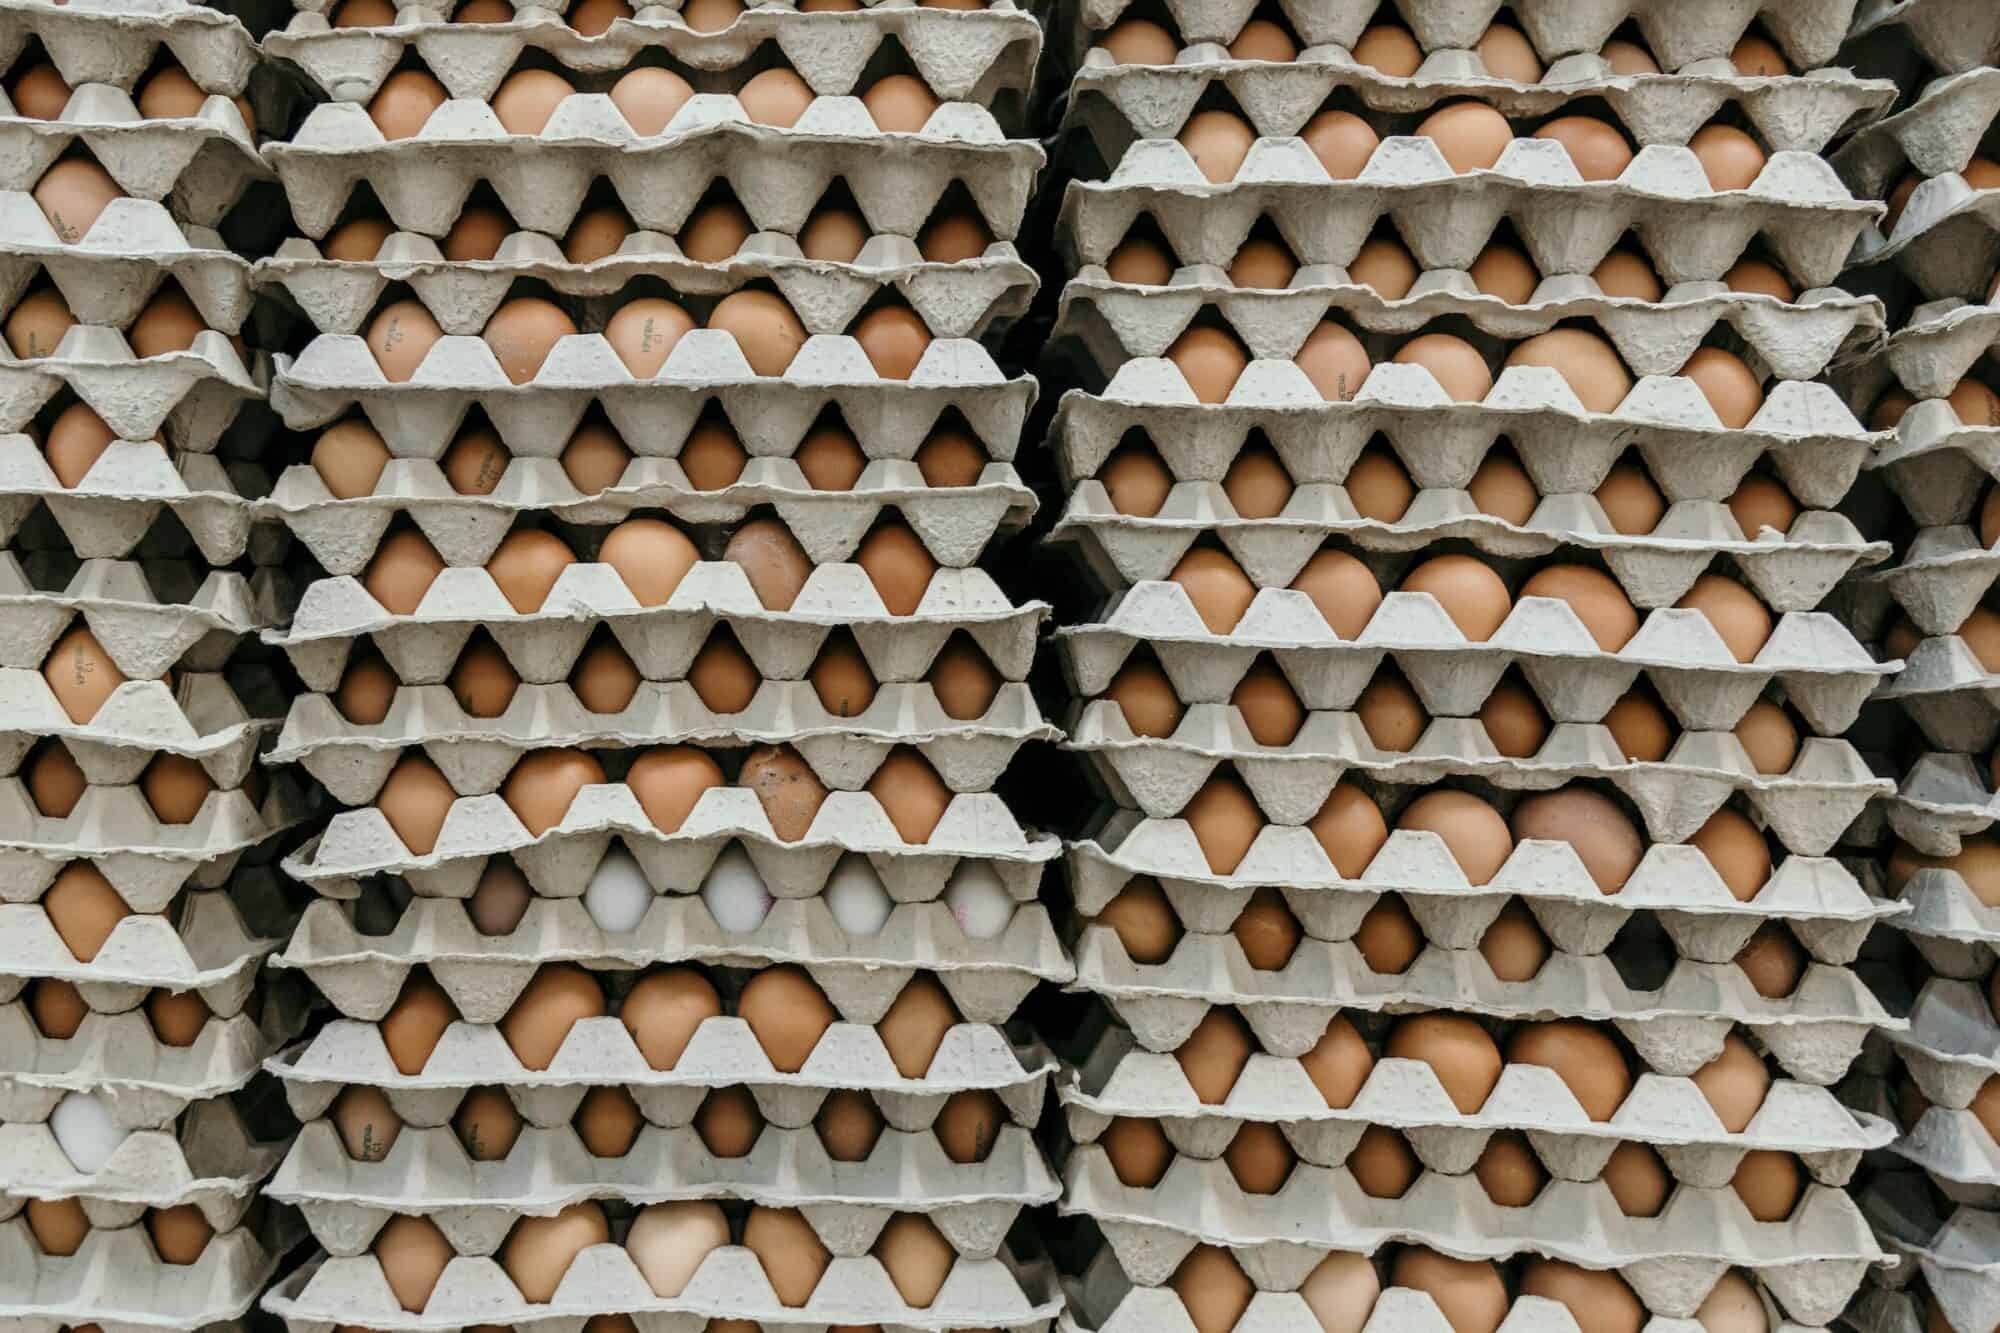 Stacks of brown eggs in cartons.